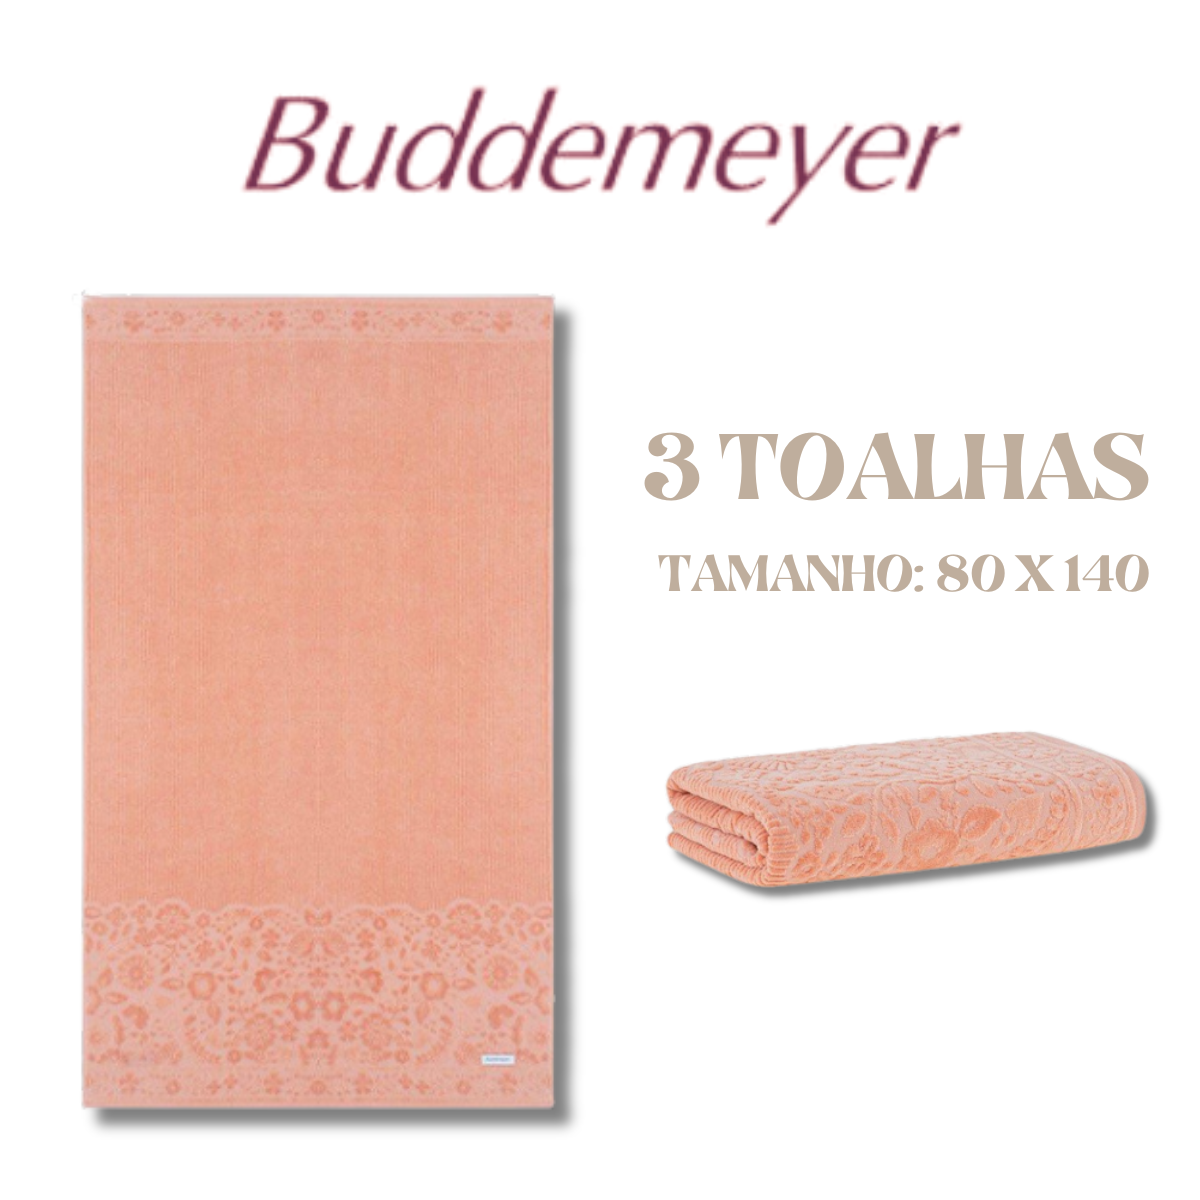 Kit 3 Toalhas de Banho Buddemeyer Candy 80x140:laranja - 2